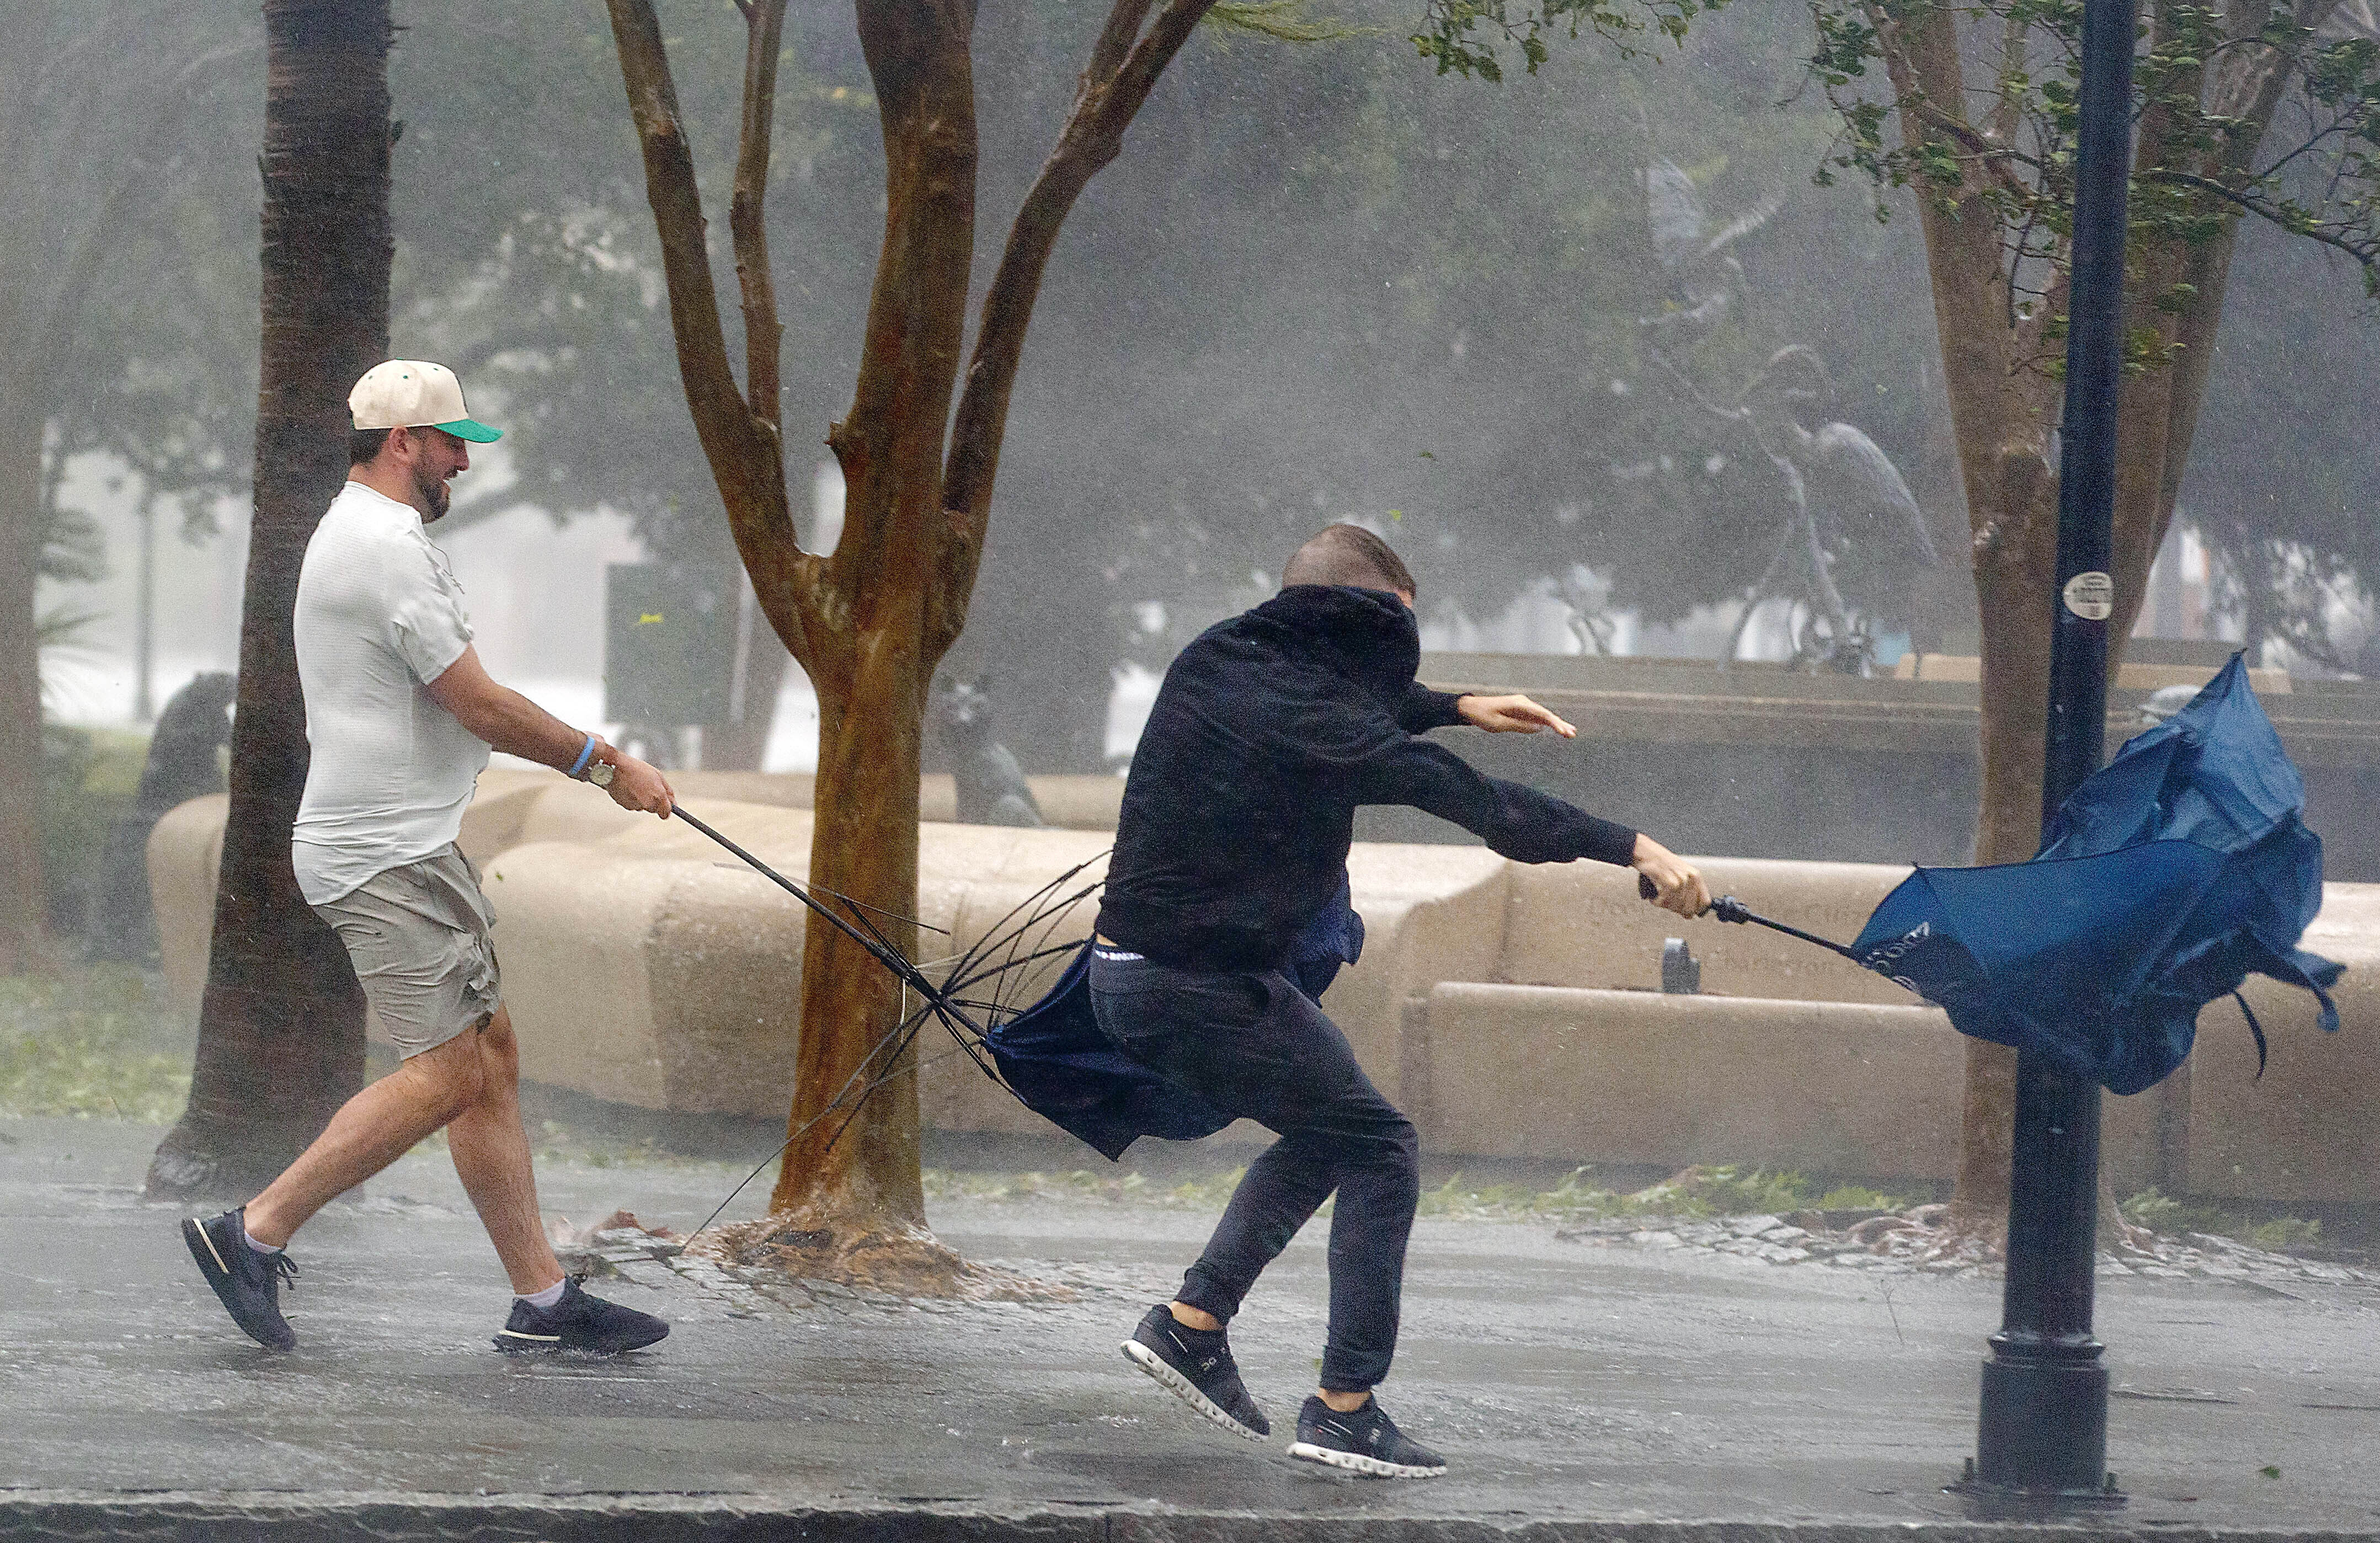 Wind gusts, blowing down King Street, twist umbrellas during Hurricane Ian in Charleston, South Carolina, on Friday, September 30, 2022 